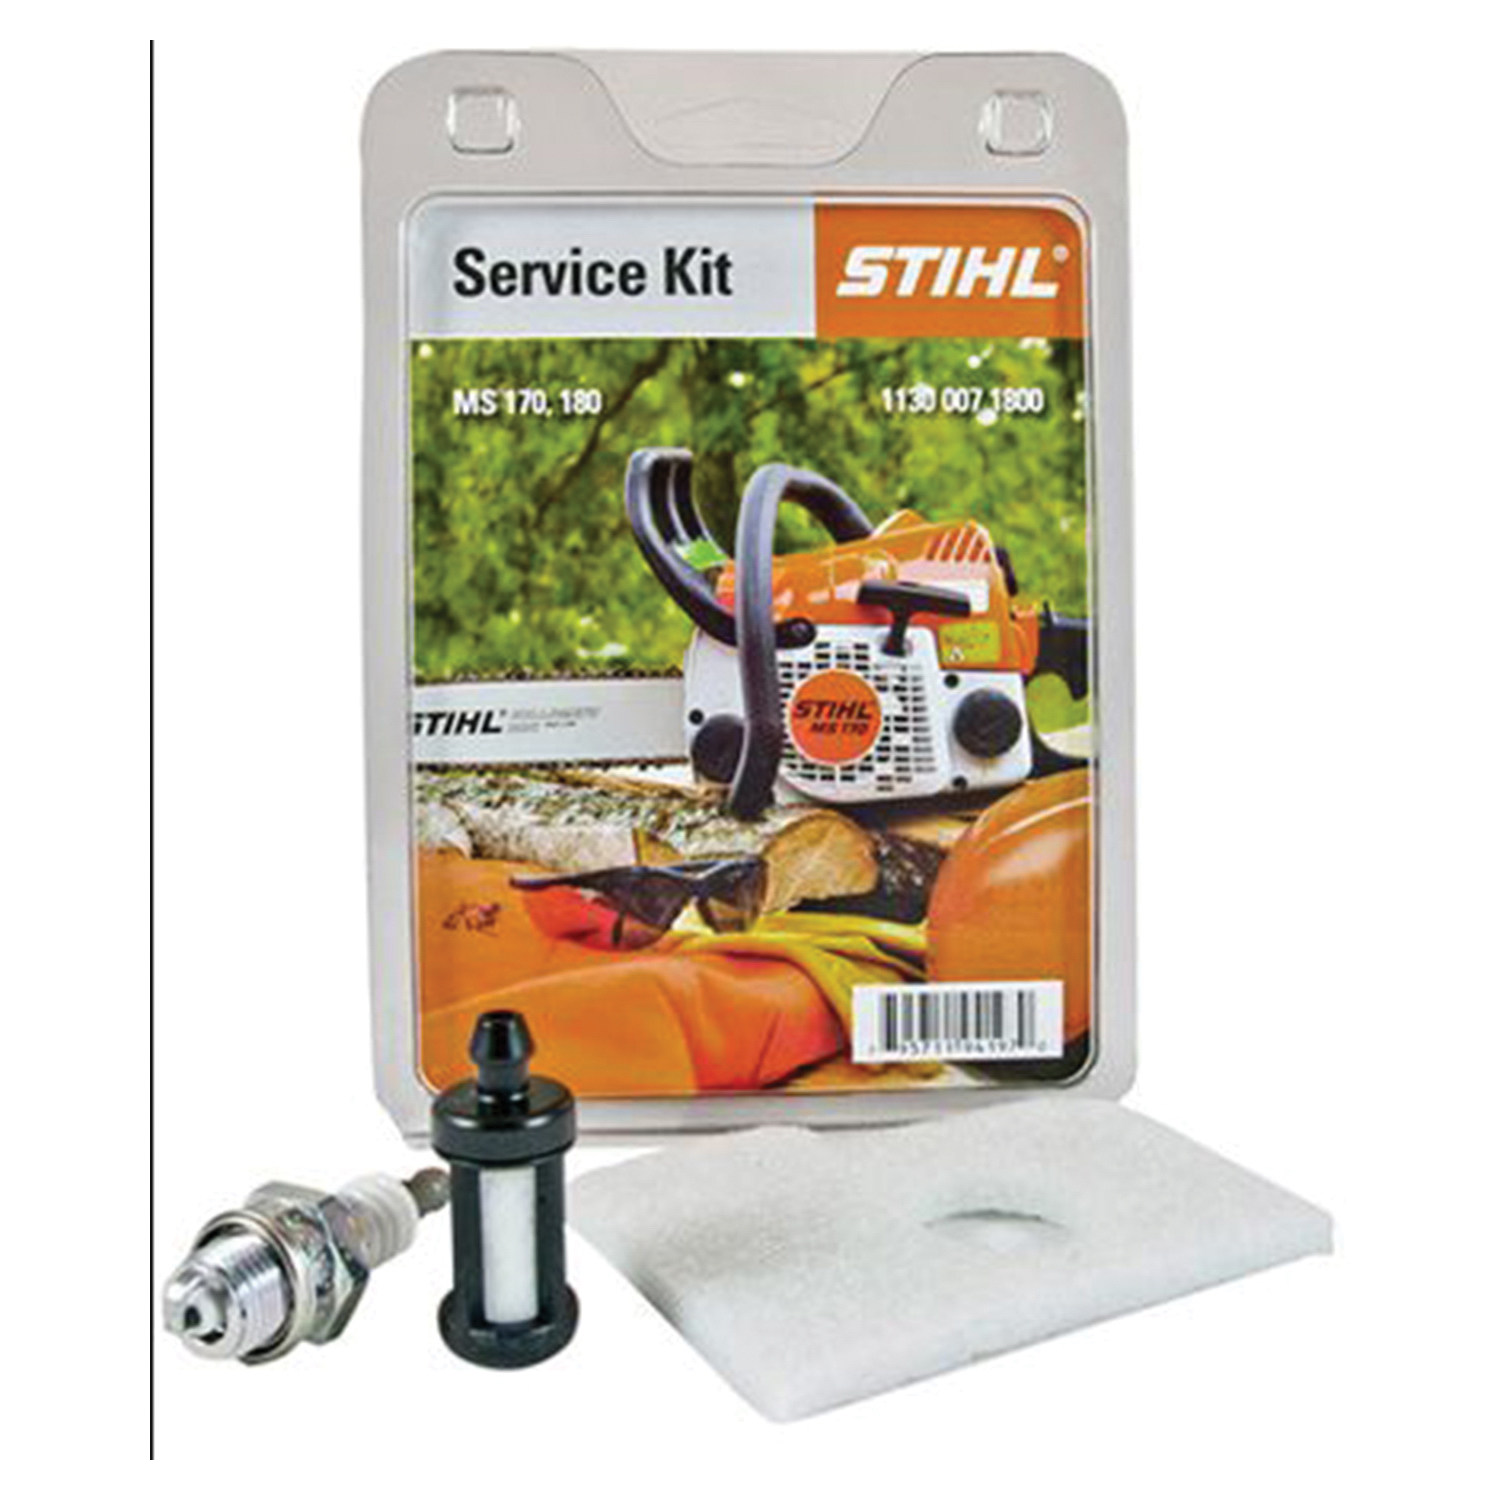 Stihl 1130 007 1800 Tune-Up Kit